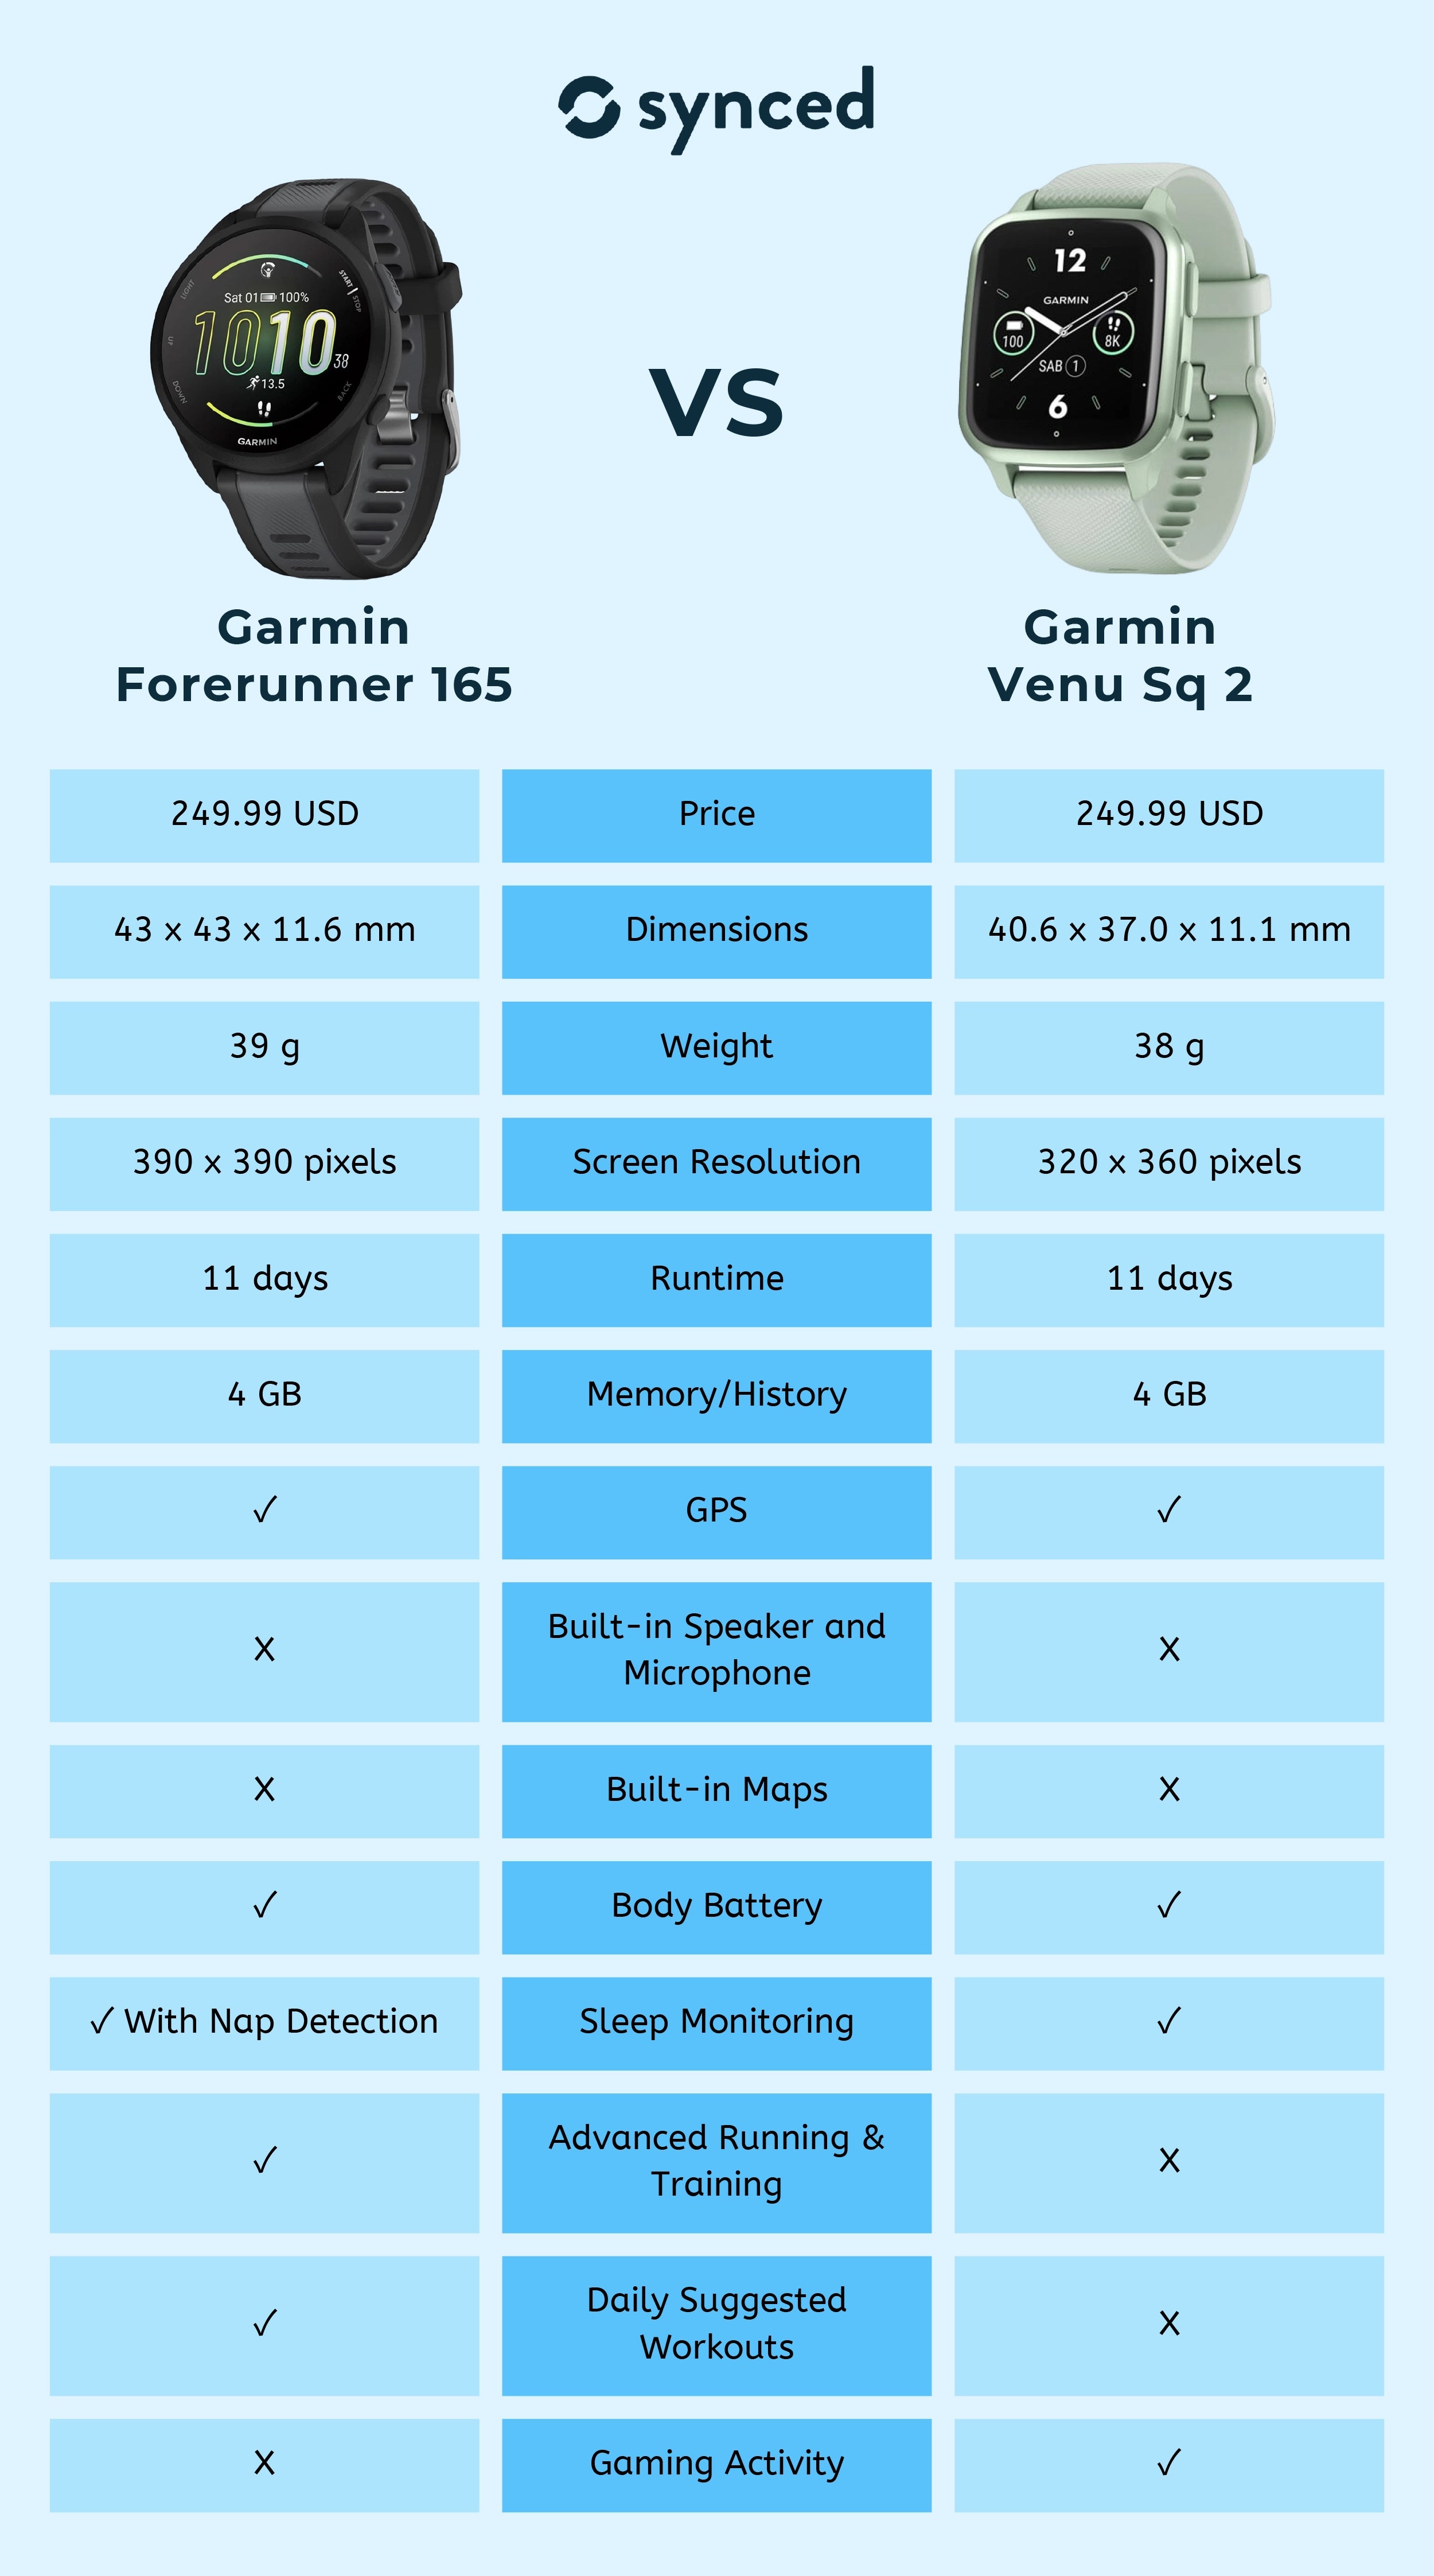 Garmin Forerunner 165 vs Venu Sq 2